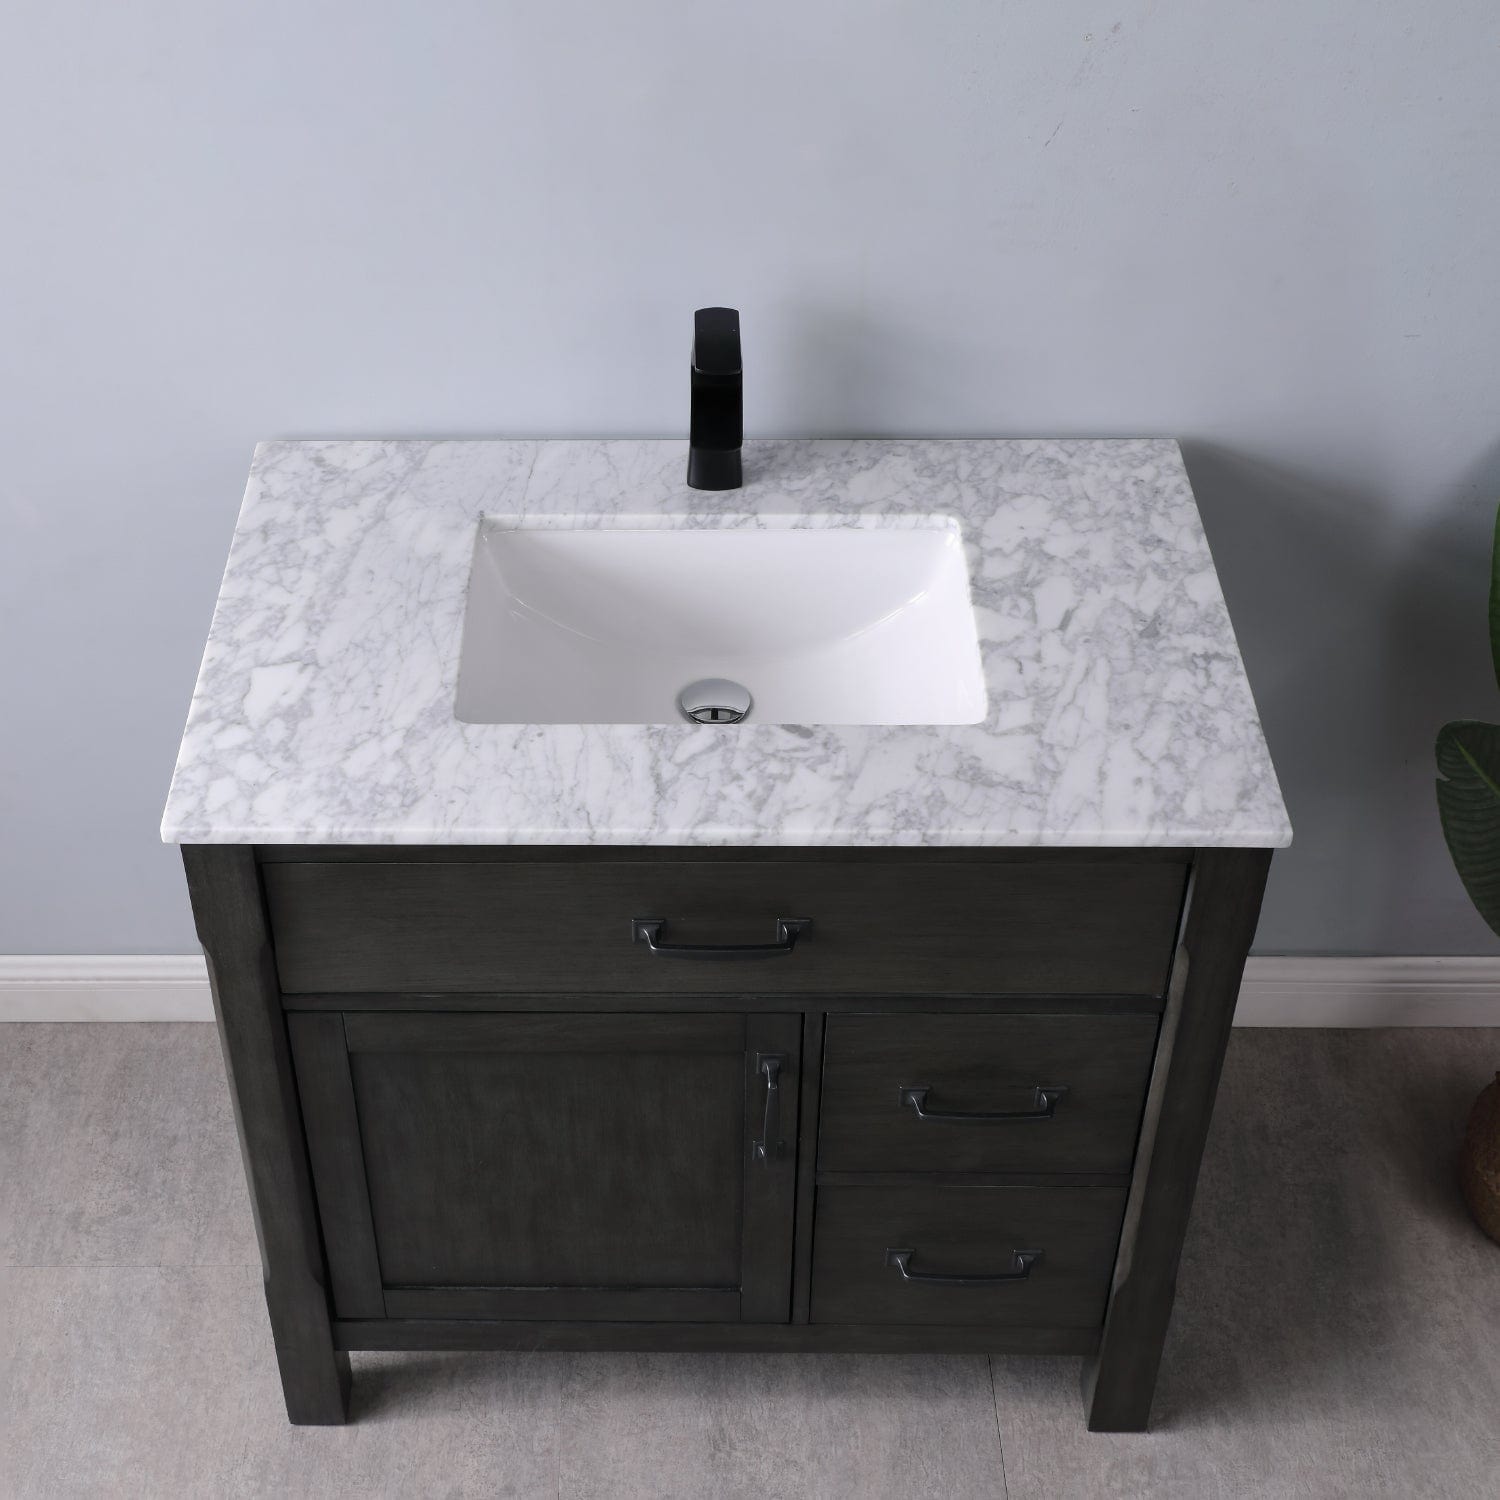 Altair Maribella 36" Single Bathroom Vanity Set in Rust Black and Carrara White Marble Countertop without Mirror 535036-RL-CA-NM - Molaix631112970280Vanity535036-RL-CA-NM